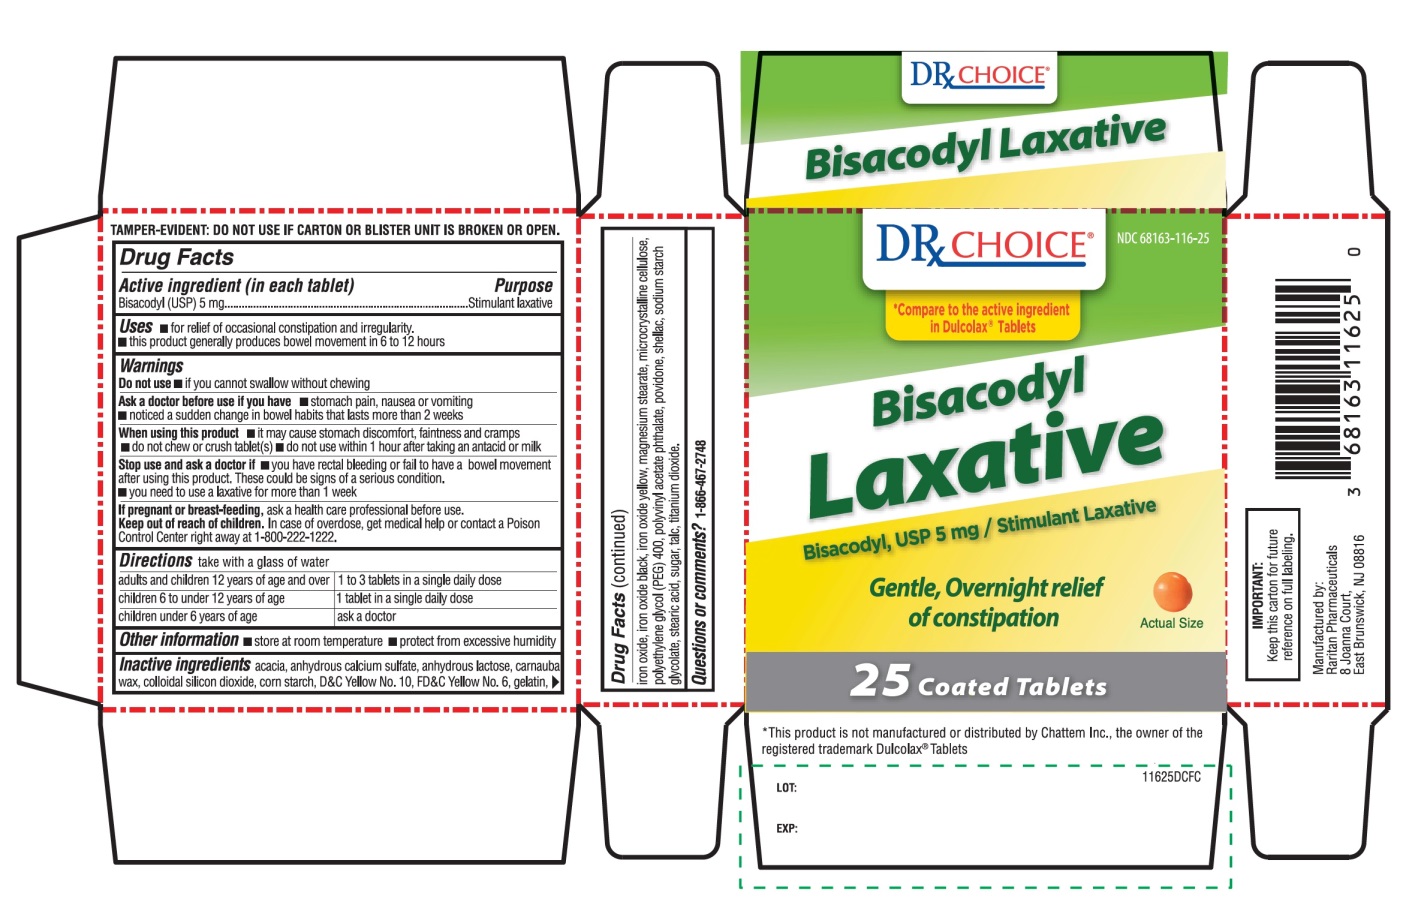 DRx Choice Bisacodyl Laxative